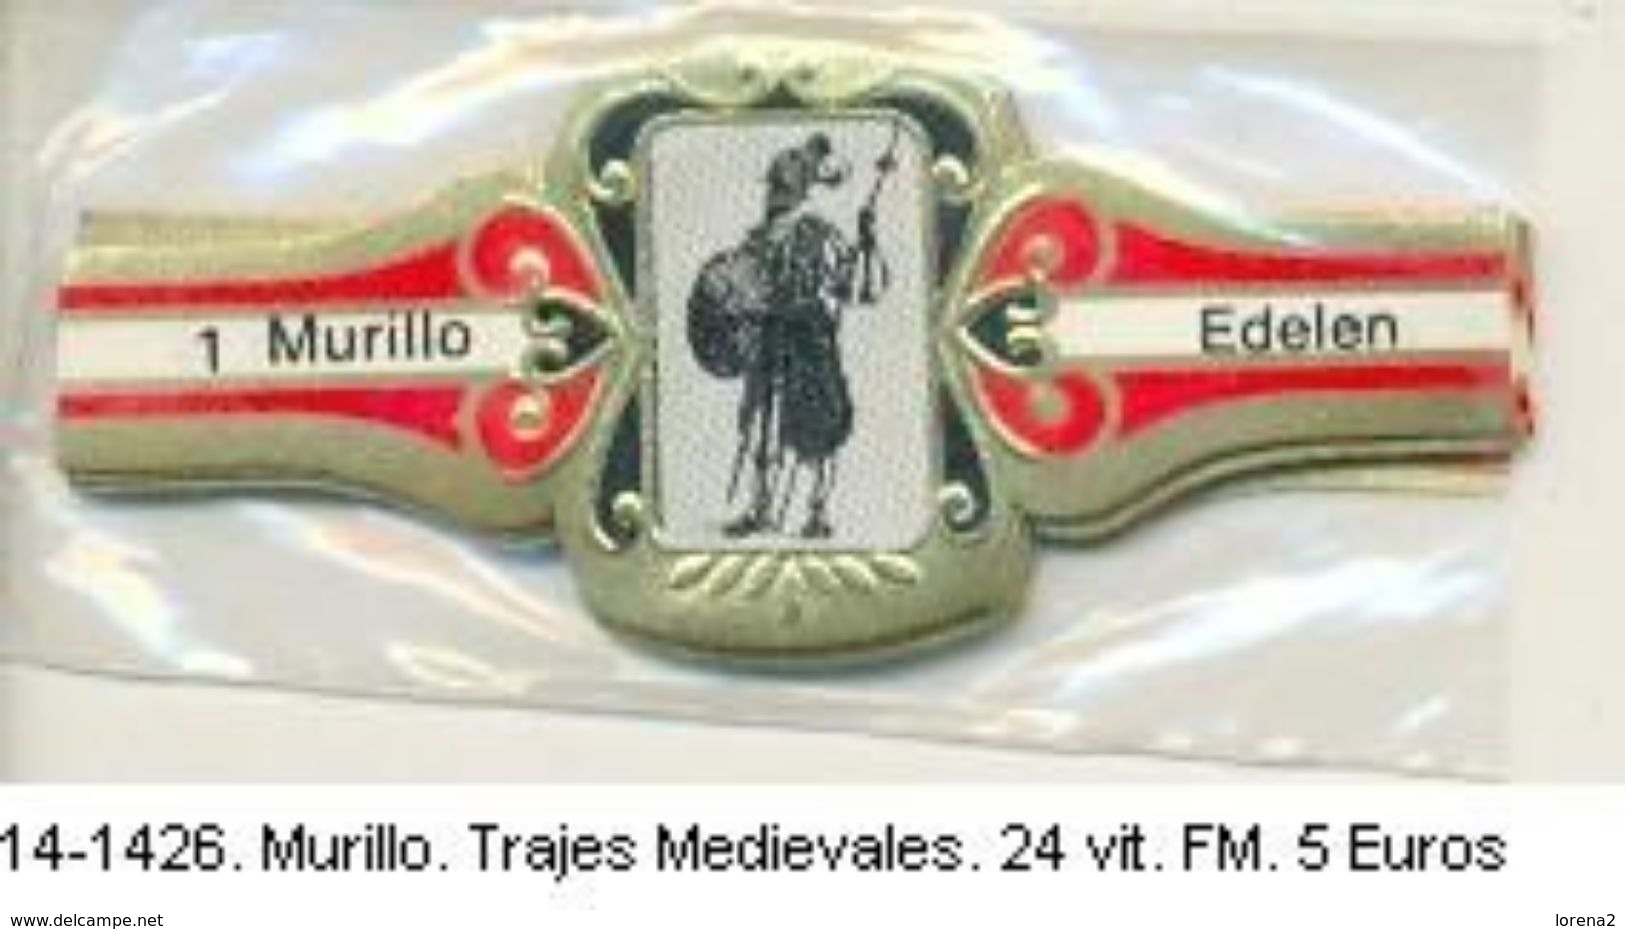 Vitolas Murillo. Trajes Medievales. Ref. 14-1426 - Vitolas (Anillas De Puros)